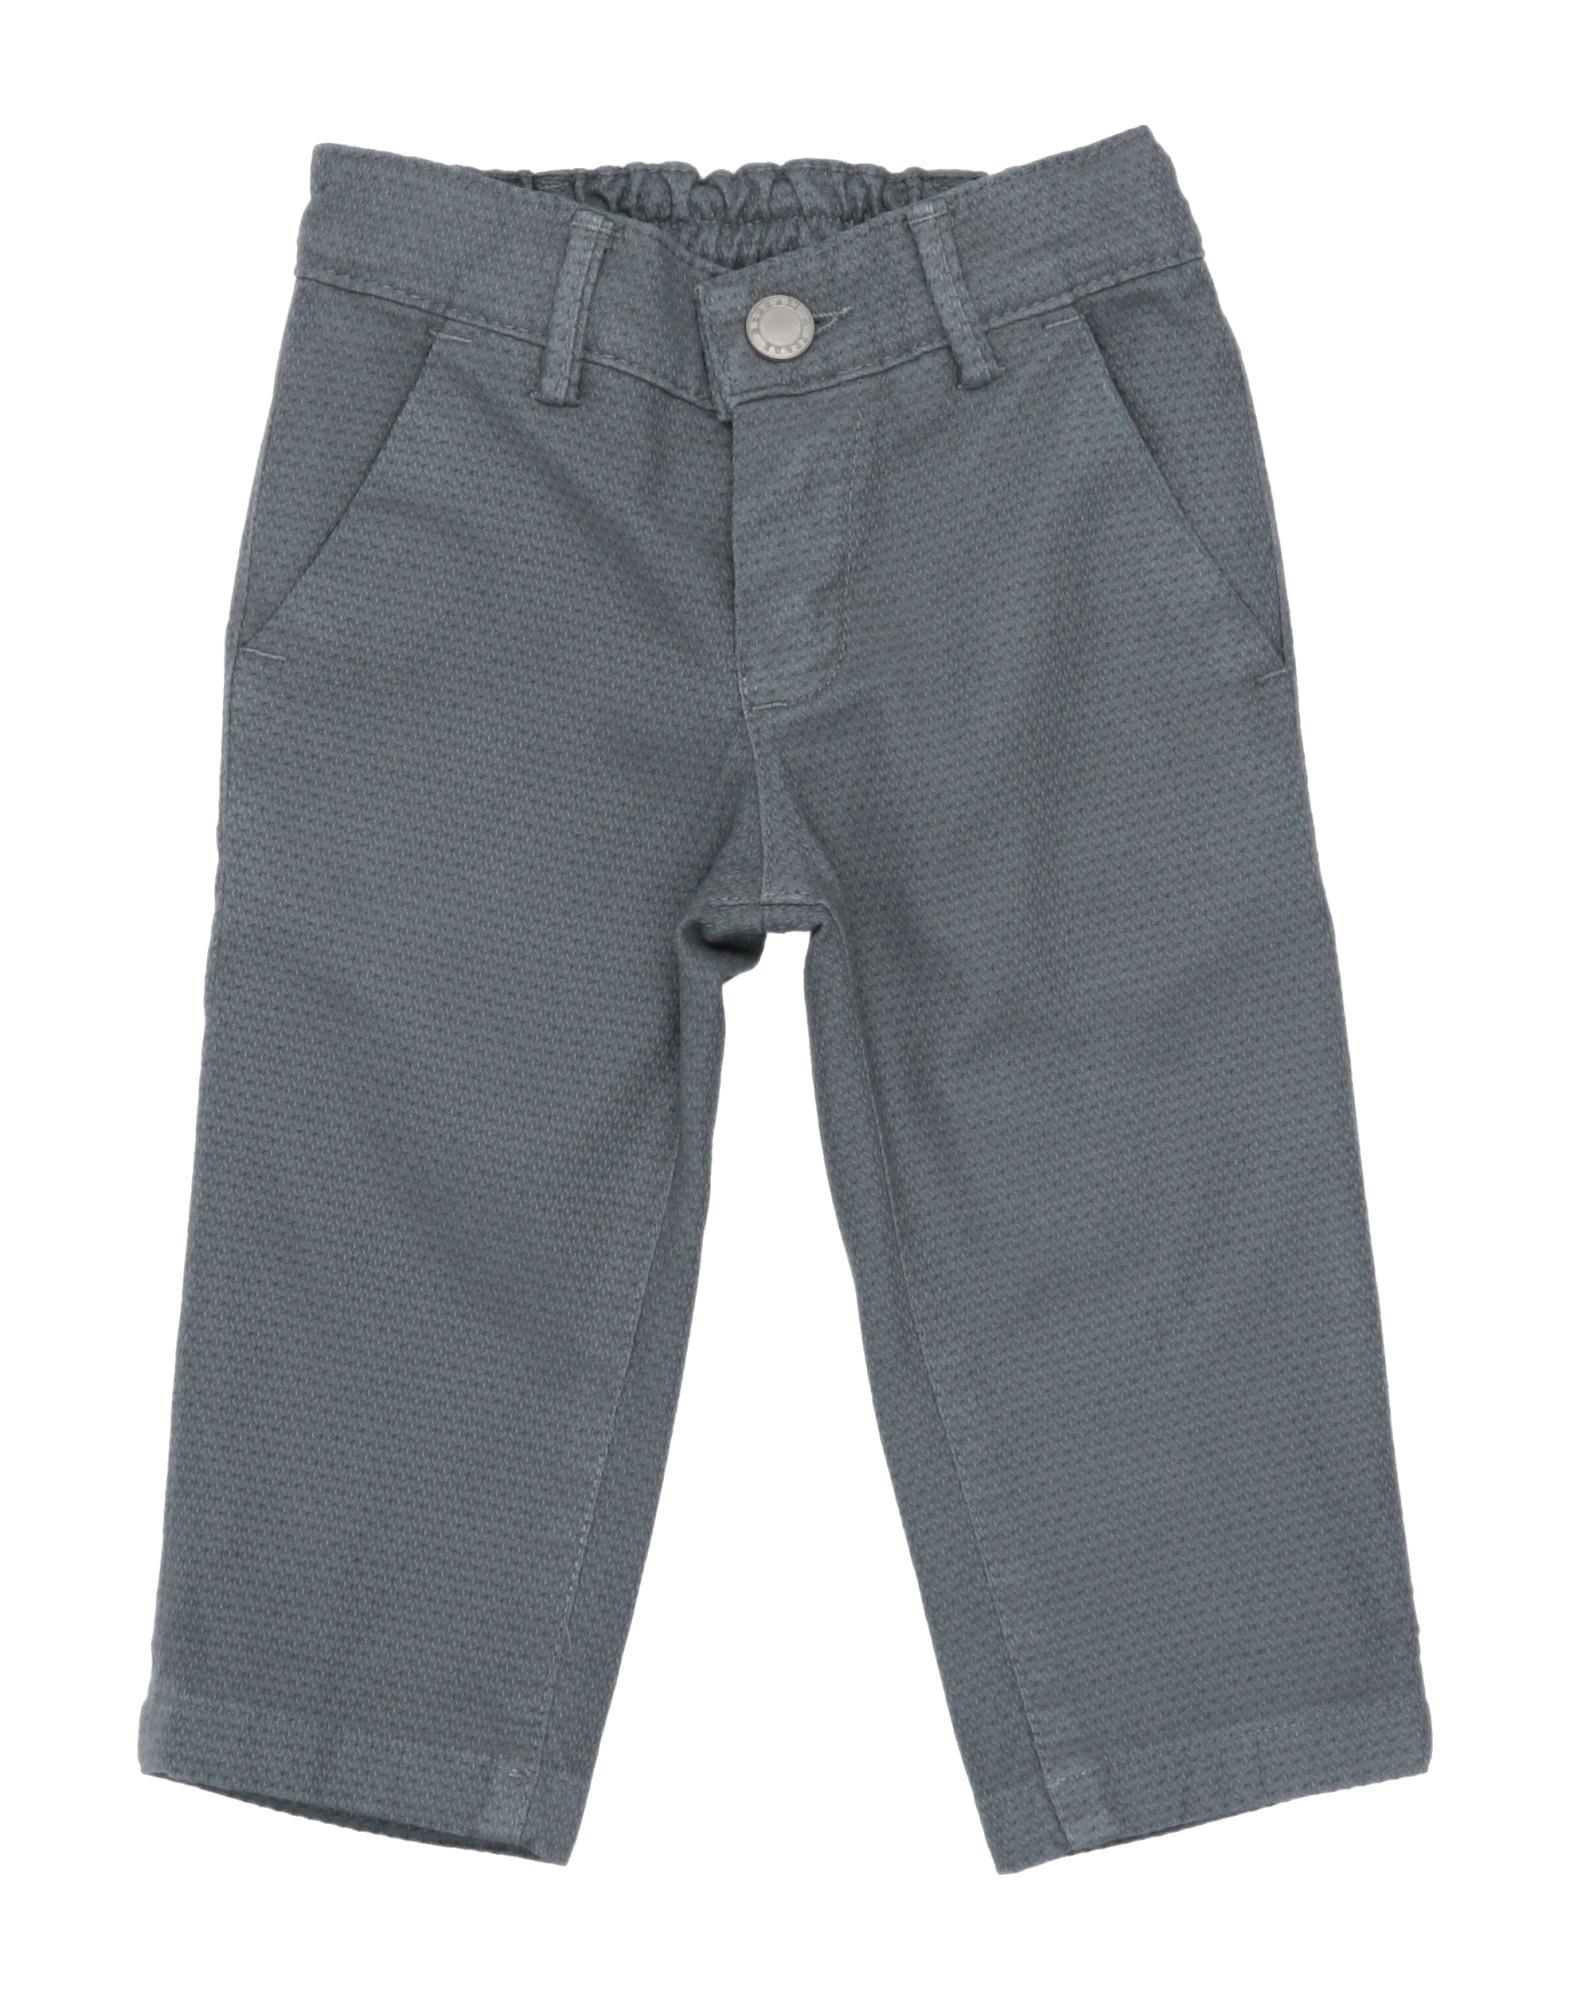 Manuell & Frank Kids' Pants In Grey